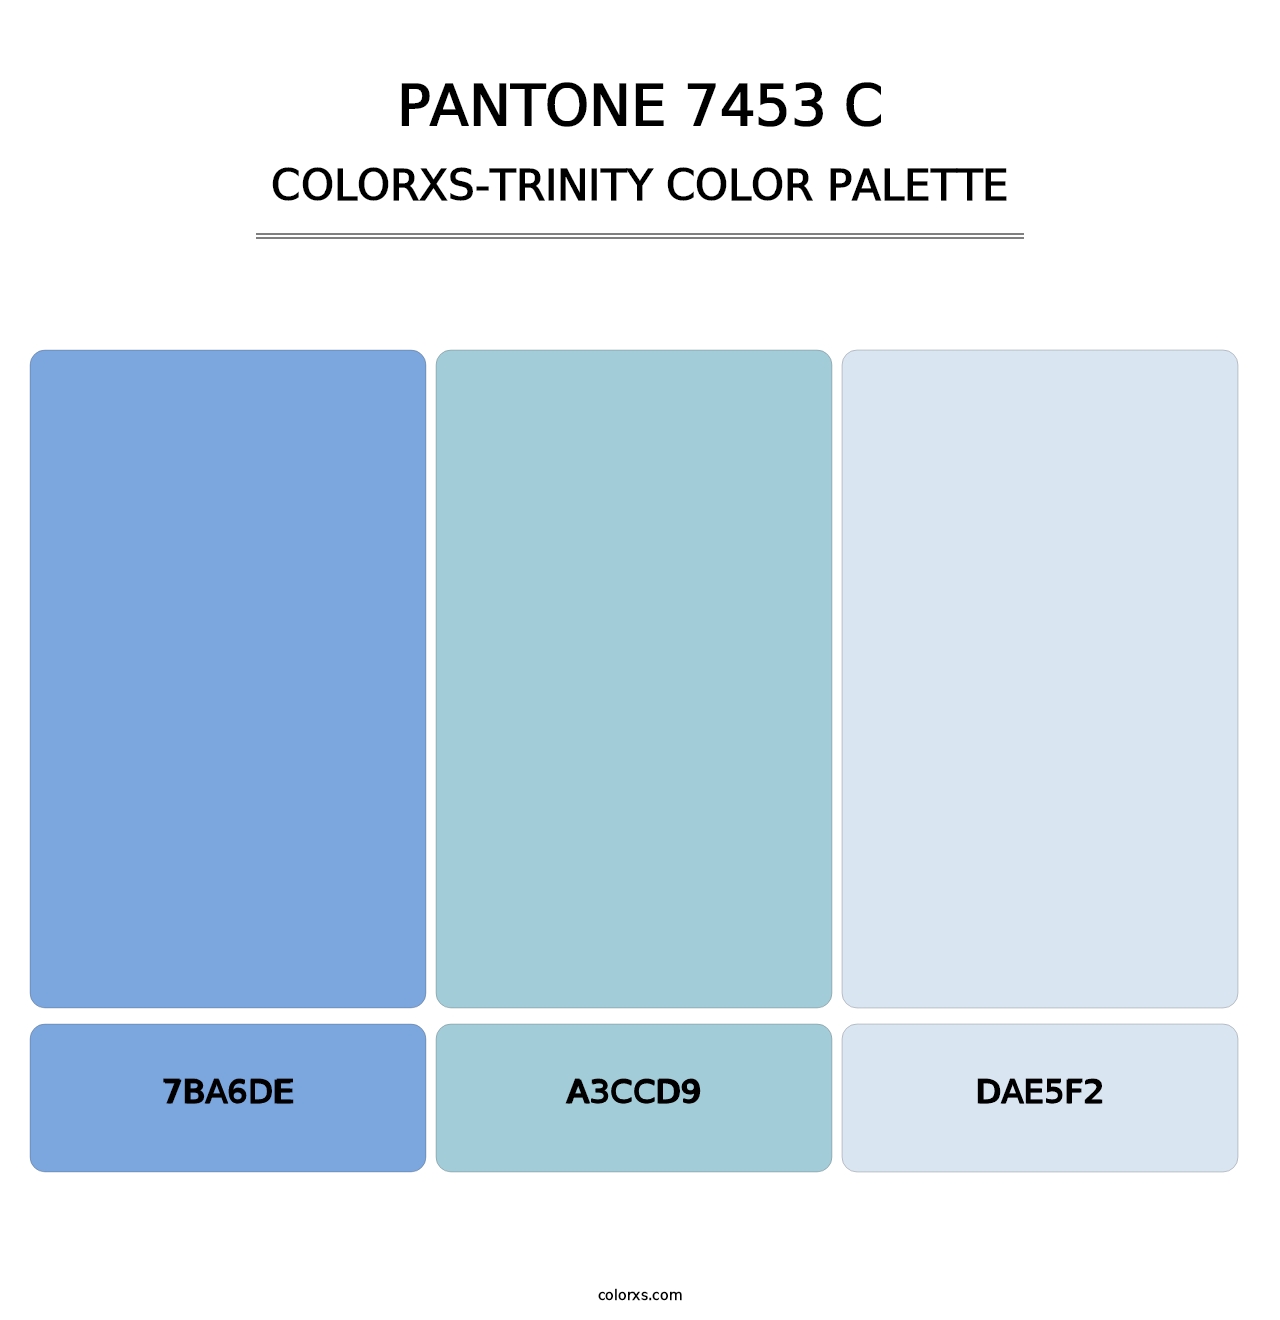 PANTONE 7453 C - Colorxs Trinity Palette